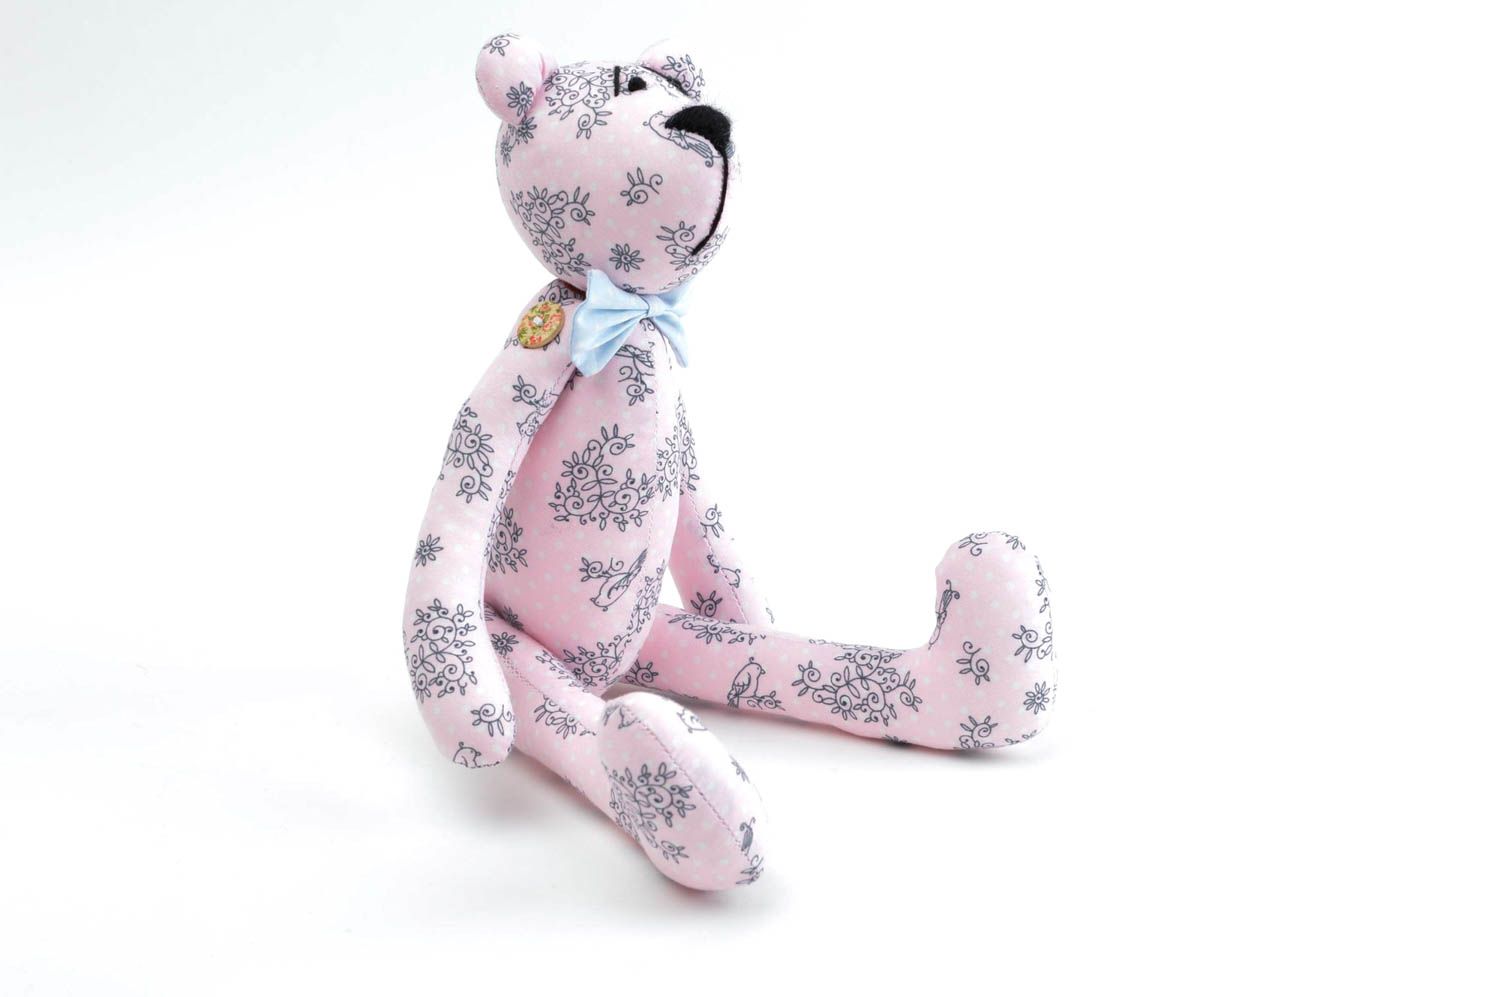 Unusual handmade fabric soft toy stuffed bear toy living room designs gift ideas photo 2